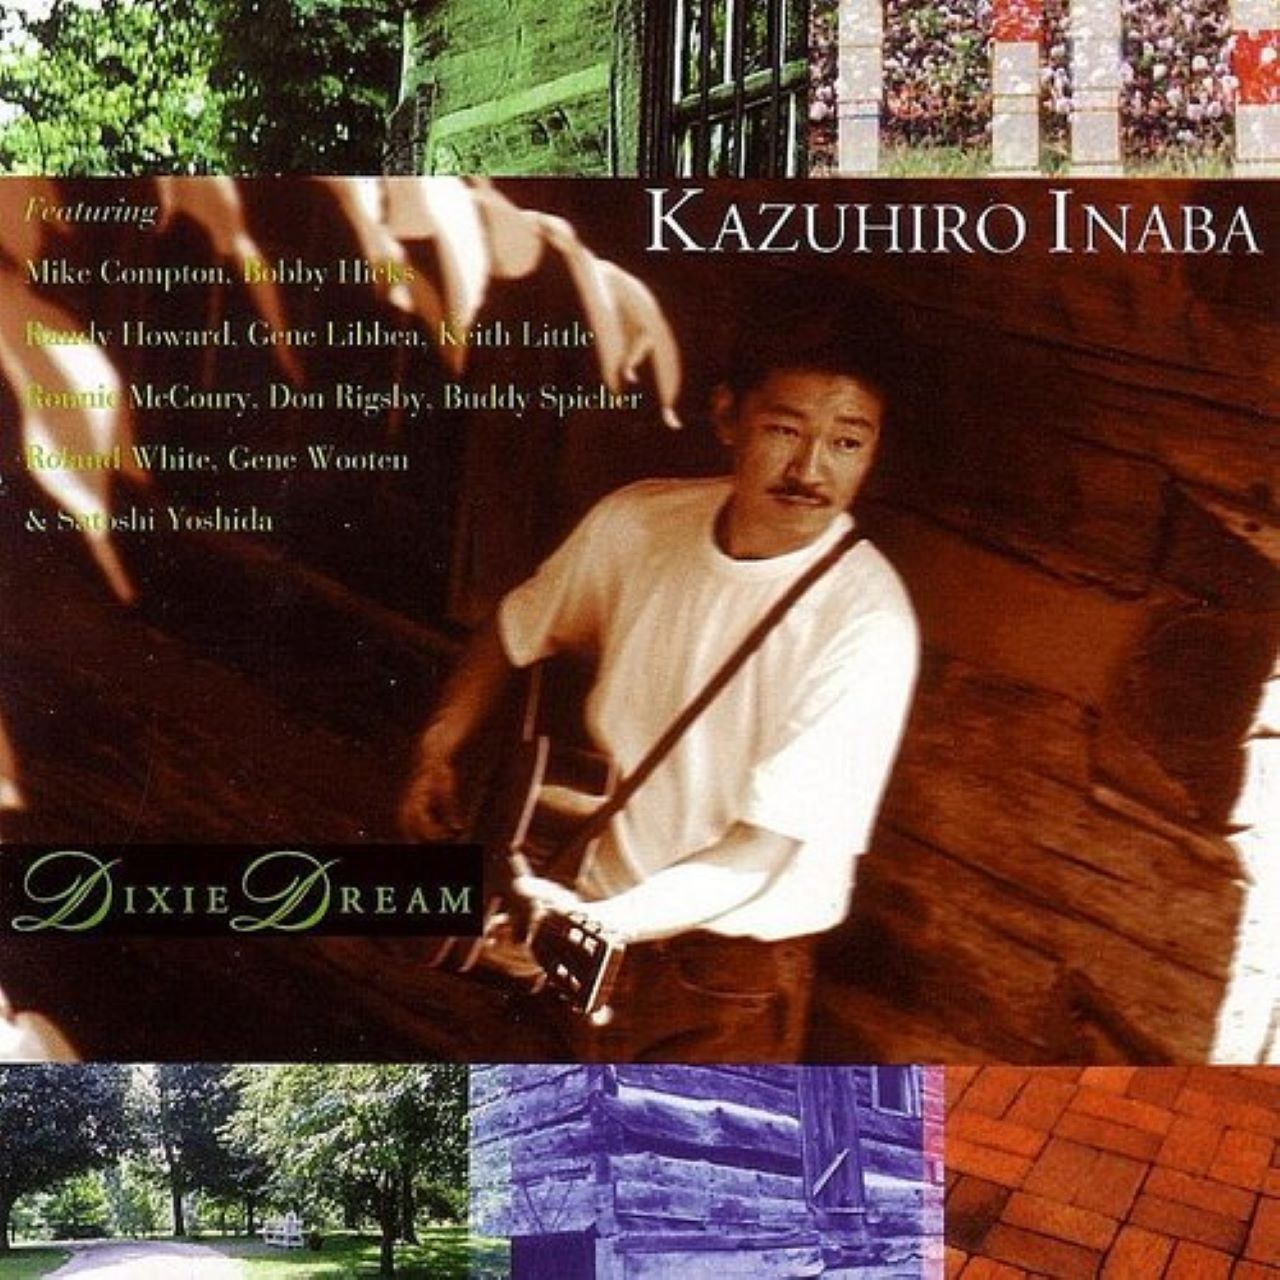 Kazuhiro Inaba - Dixie Dream cover album